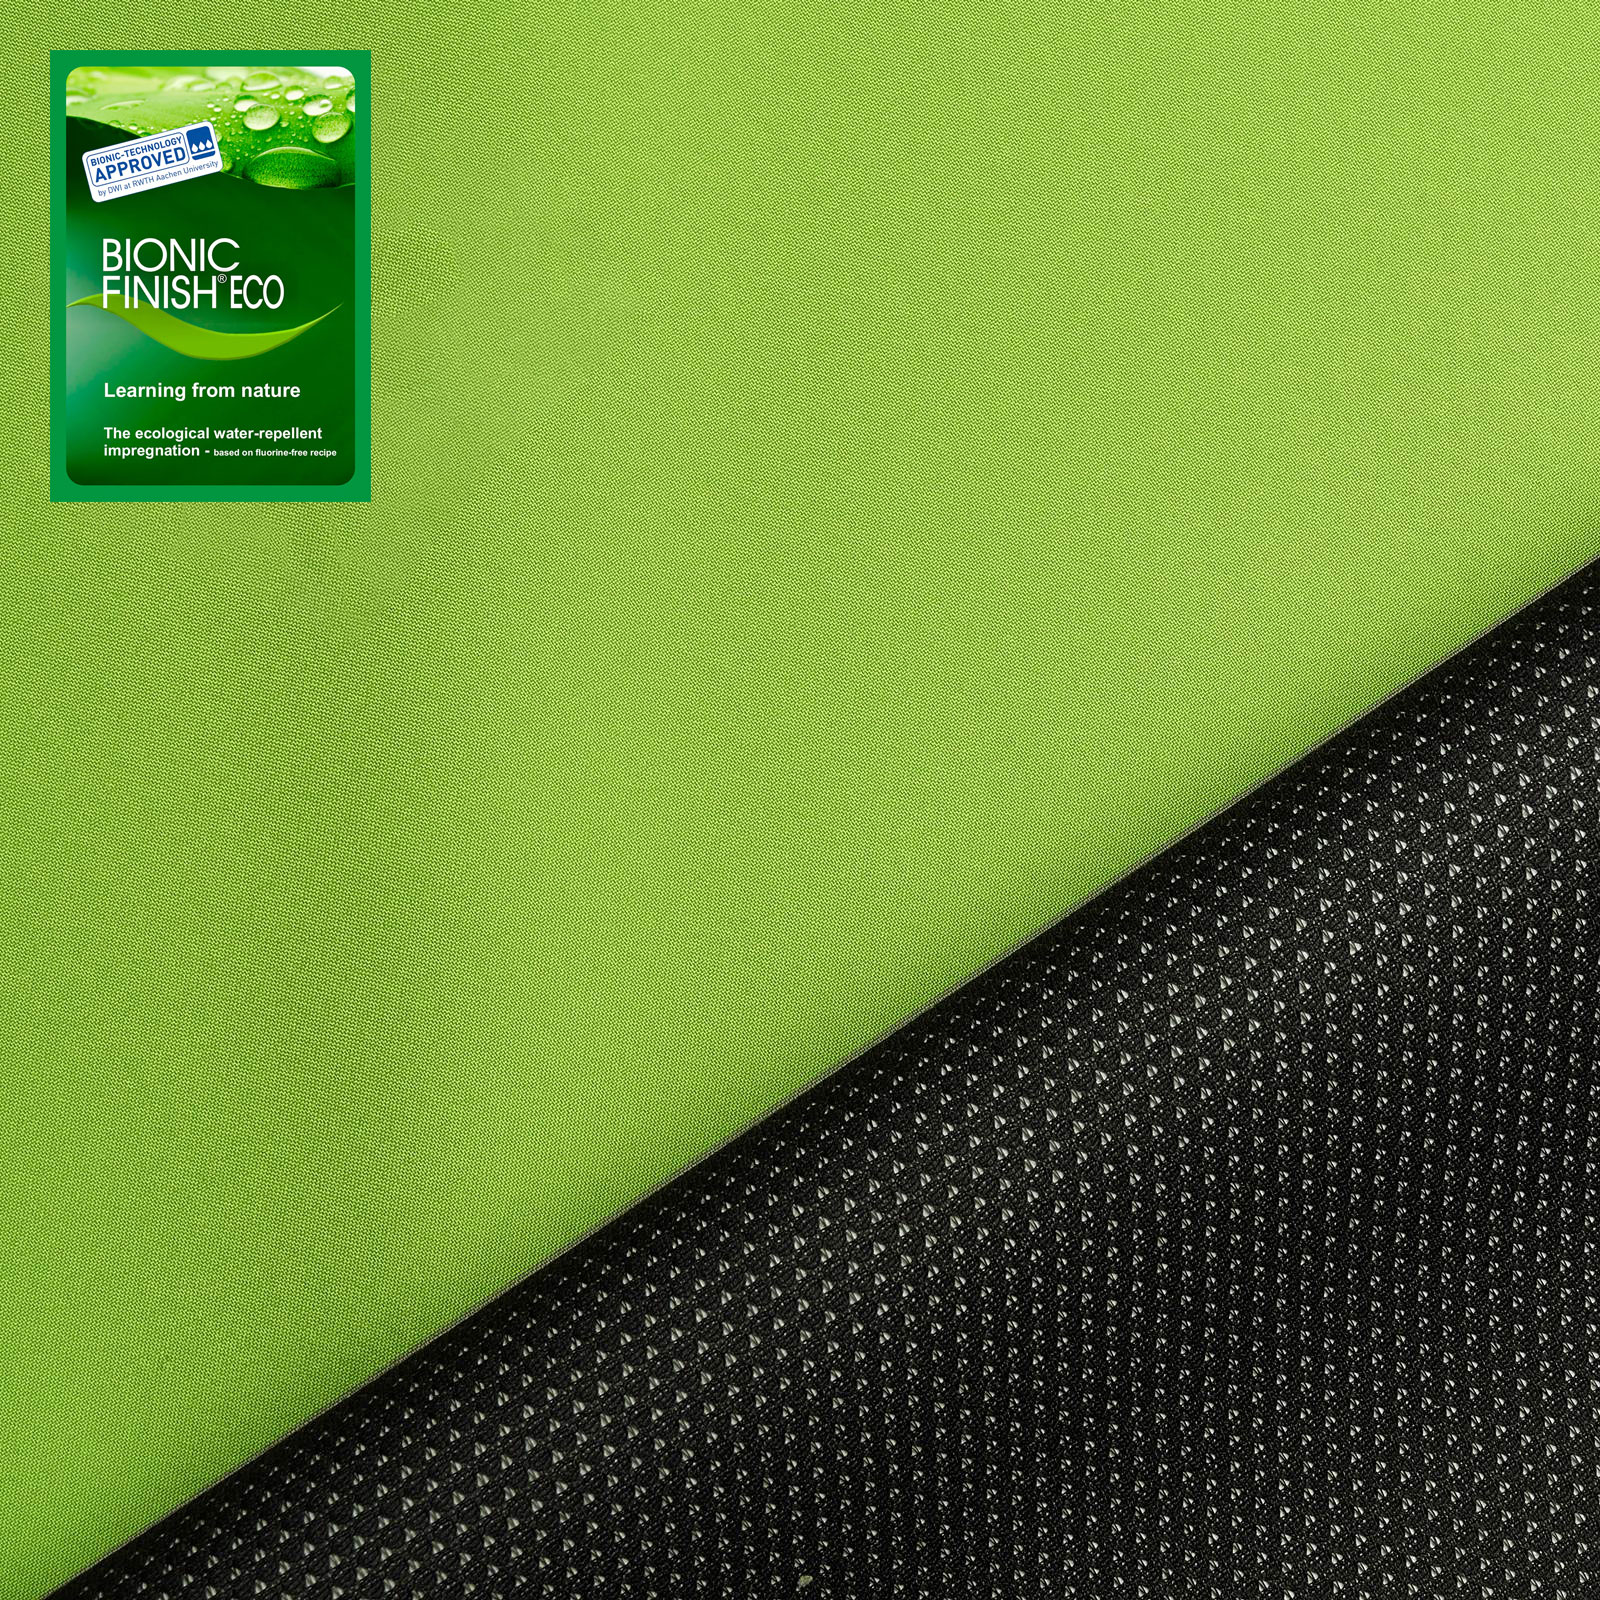 Athletik - lightweight Softshell fabric (lime)